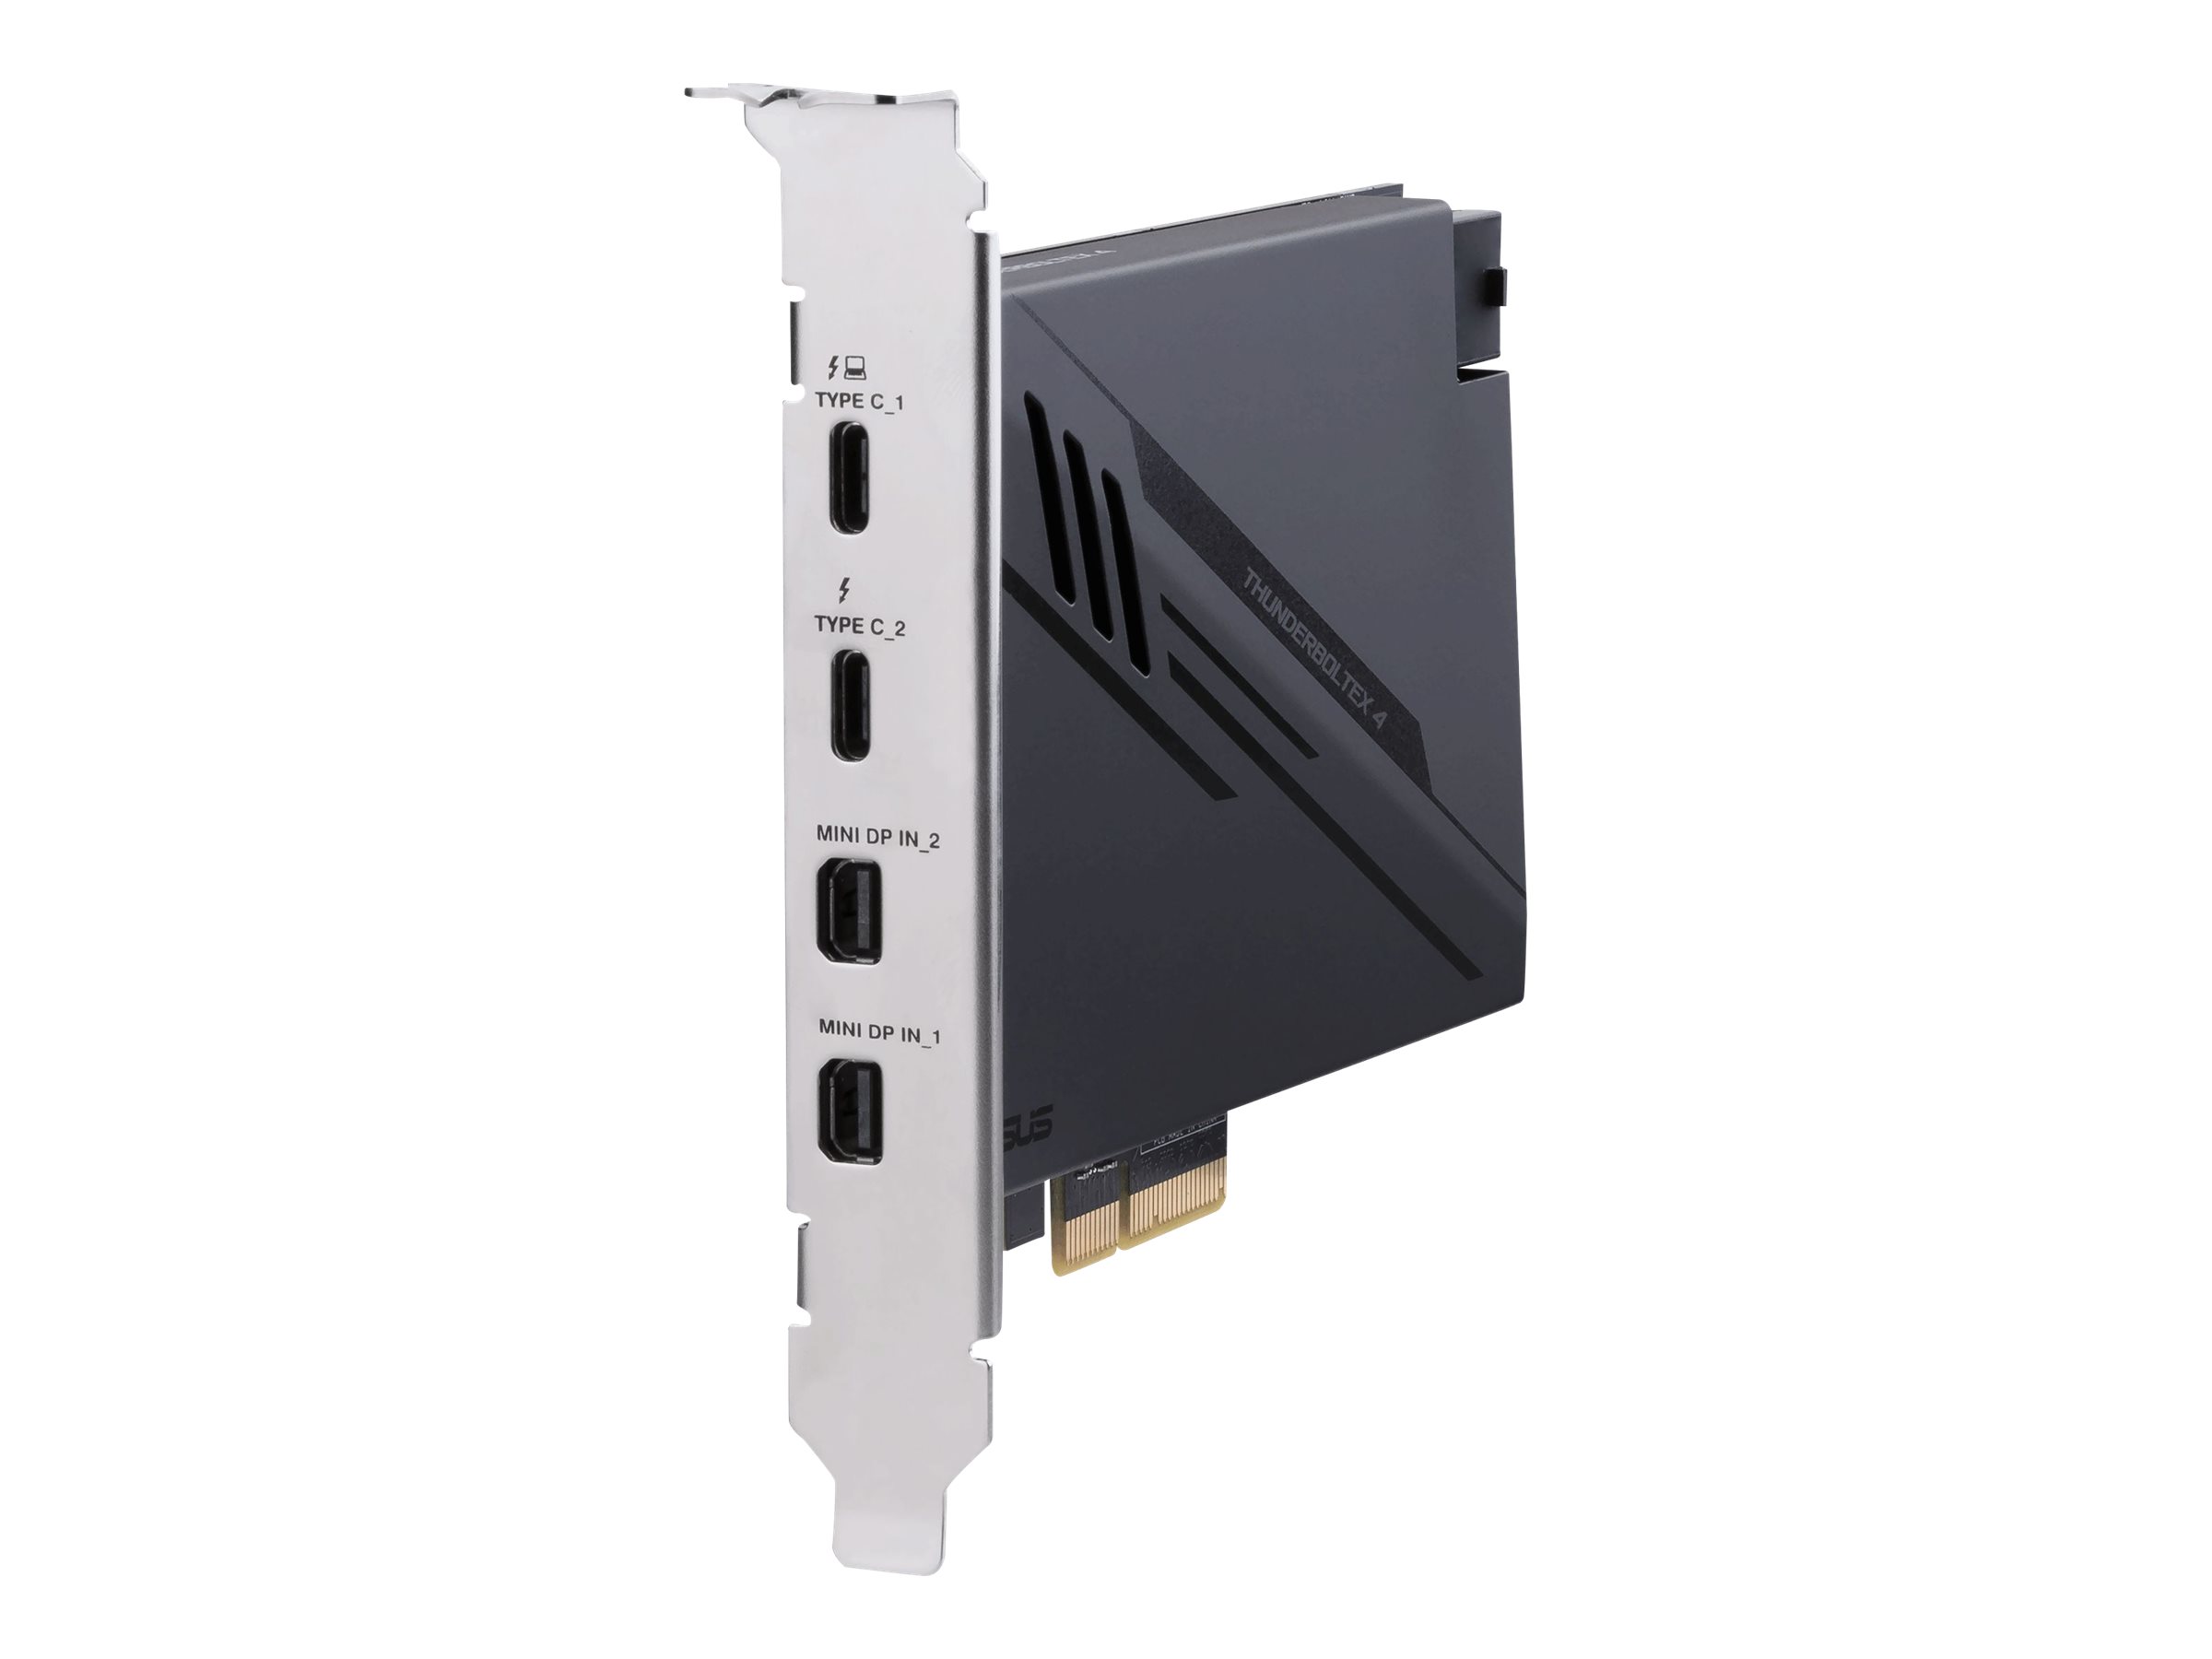 ASUS ThunderboltEX 4 - Thunderbolt-Adapter - PCIe 3.0 x4